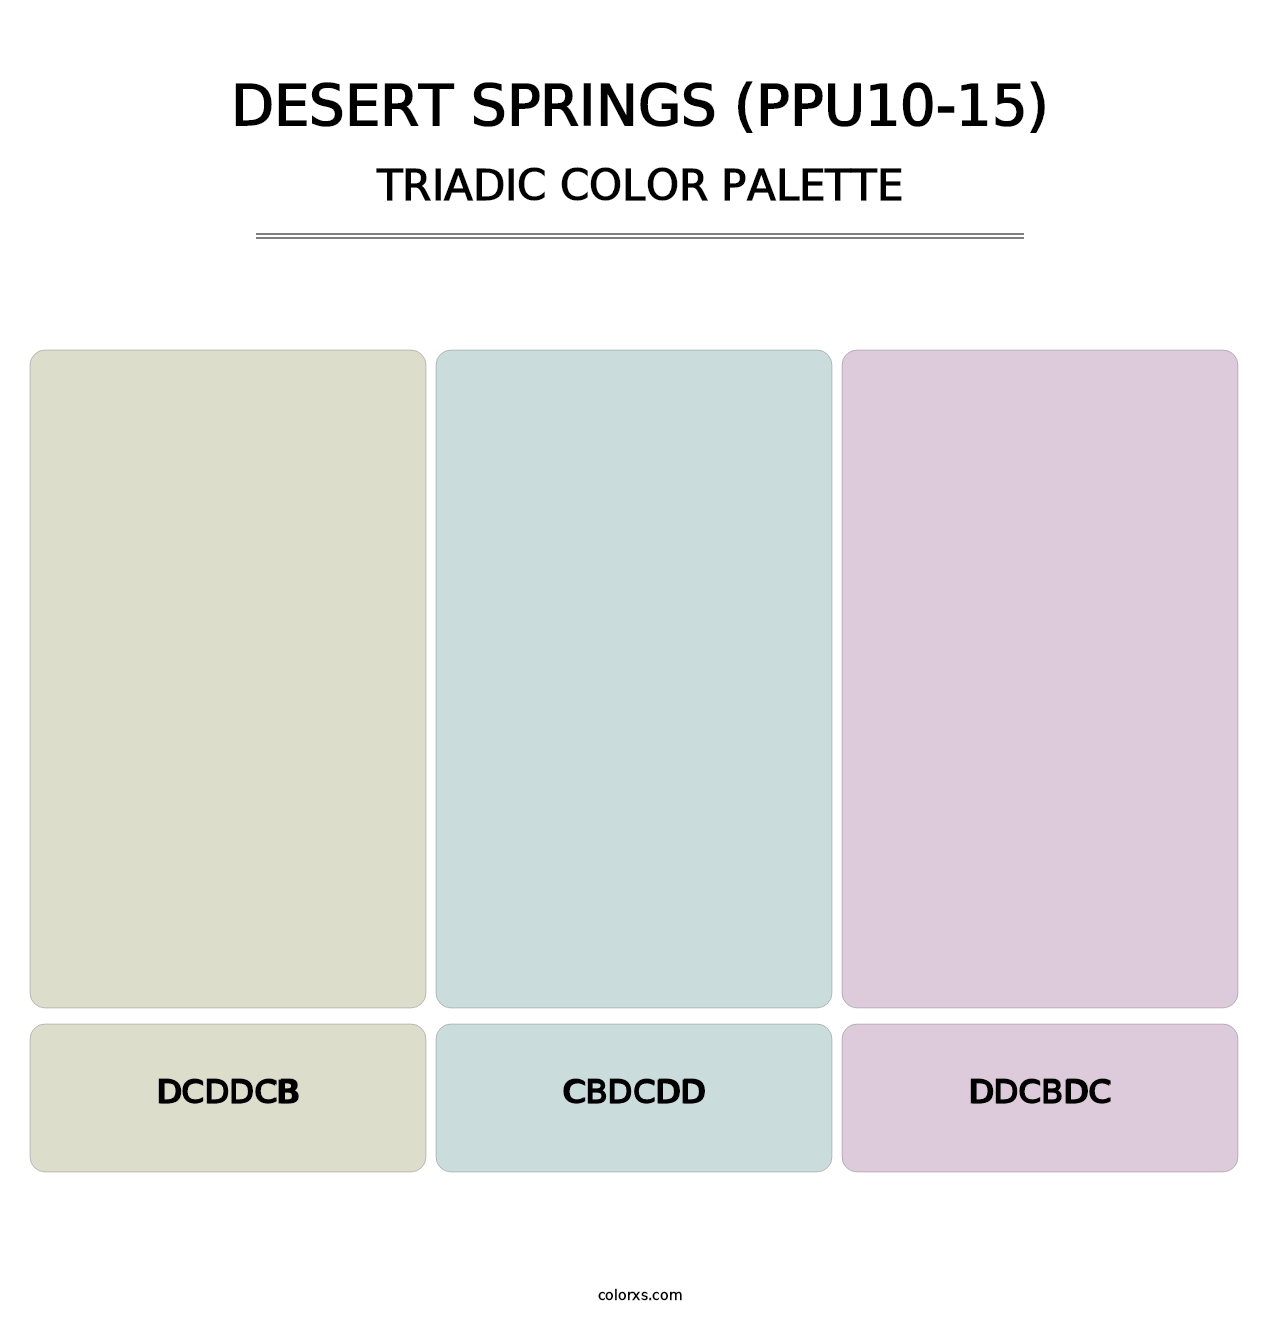 Desert Springs (PPU10-15) - Triadic Color Palette